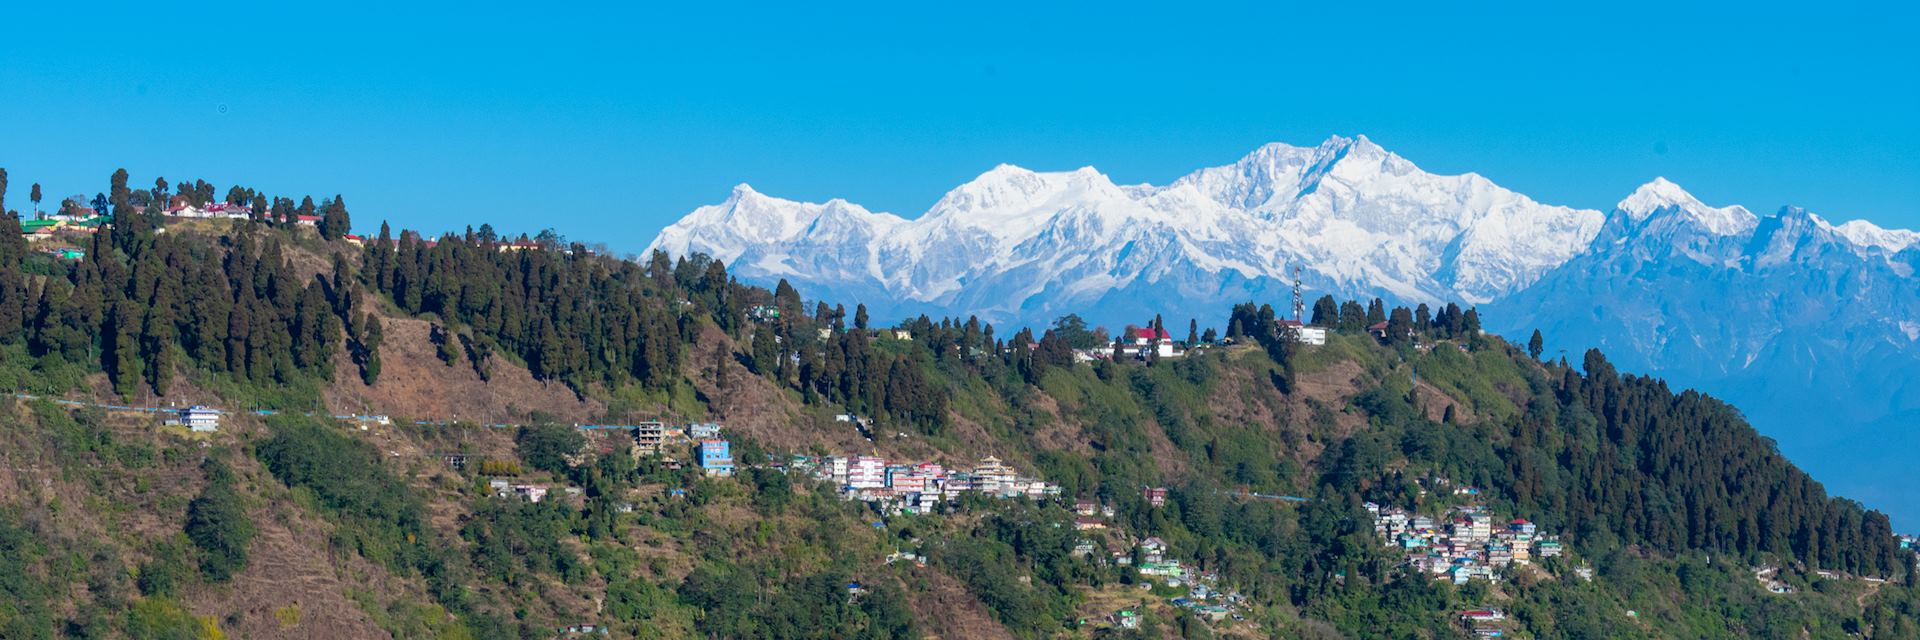 Darjeeling hills